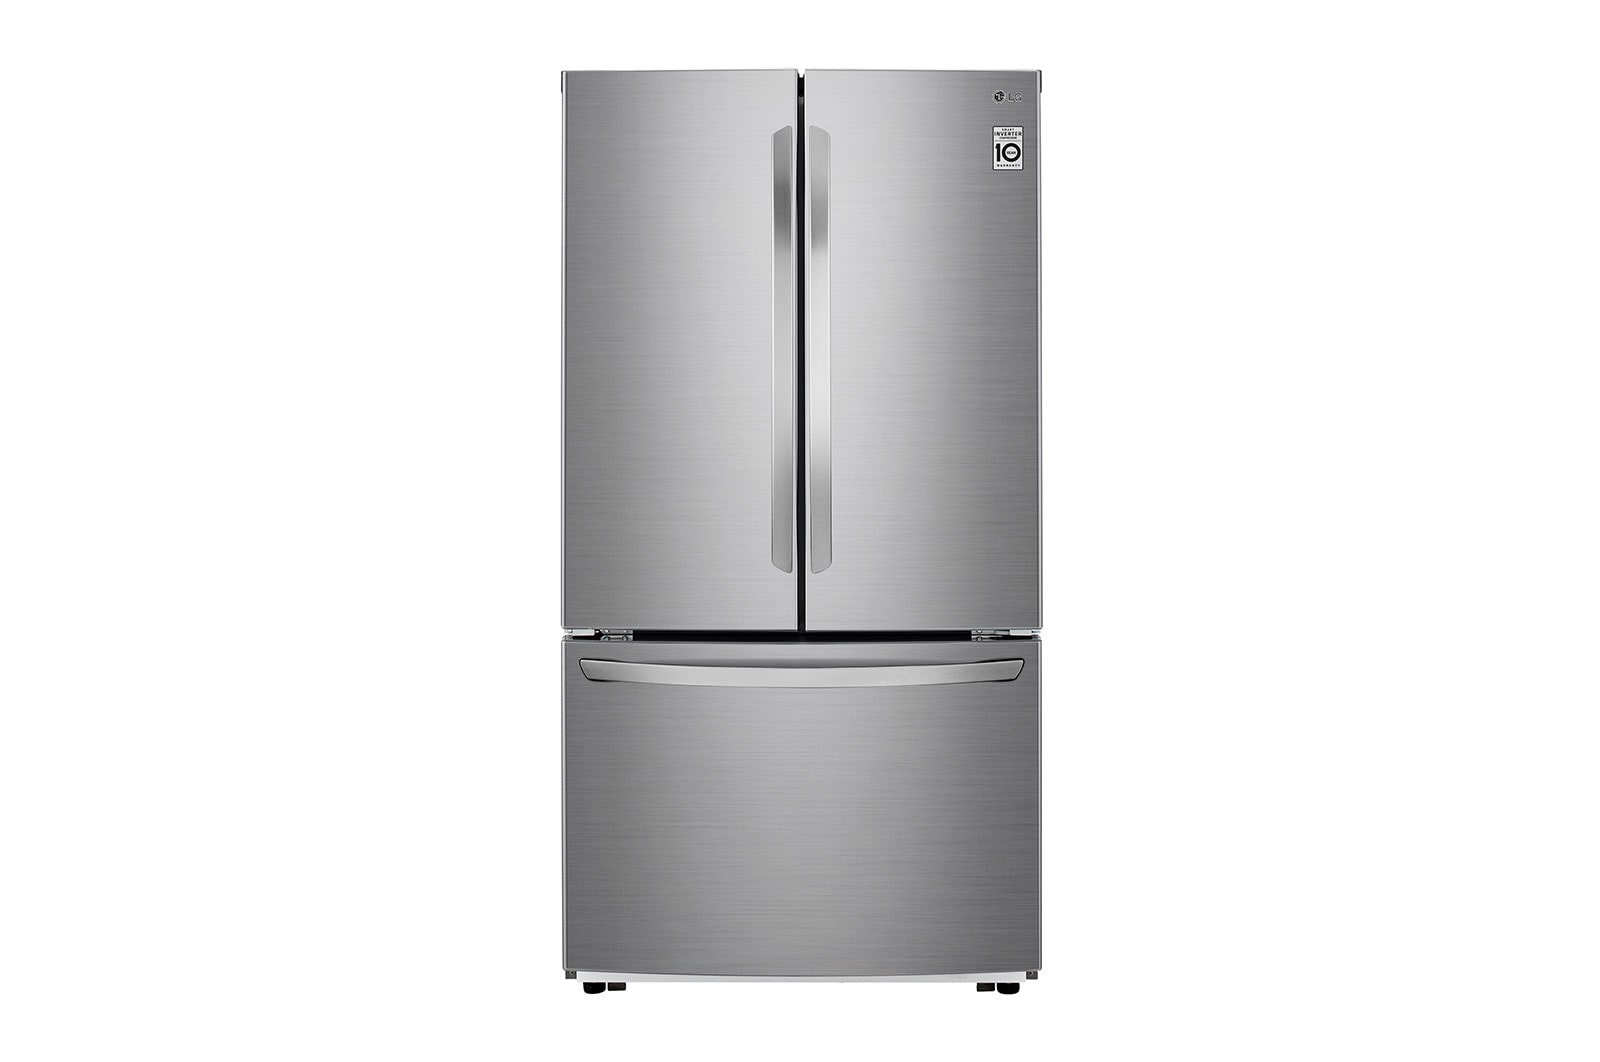 LG Refrigerador French Door 29 pies³ INVERTER, GM29BIP